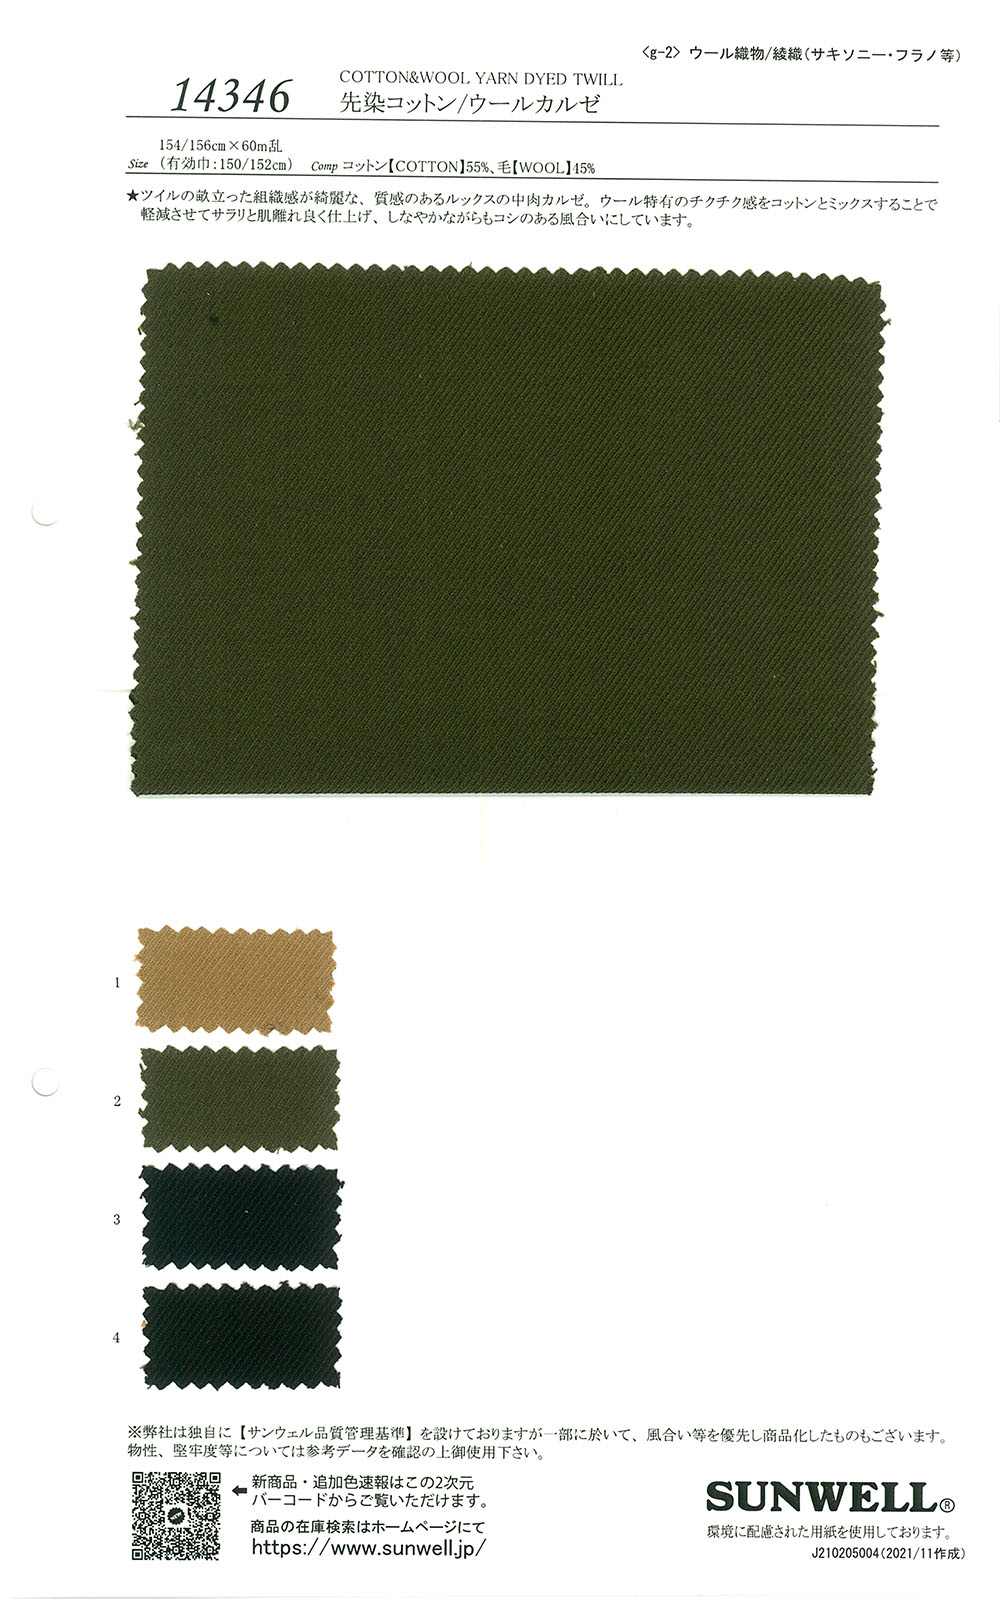 14346 Garngefärbte Baumwoll-/Wollkalze[Textilgewebe] SUNWELL